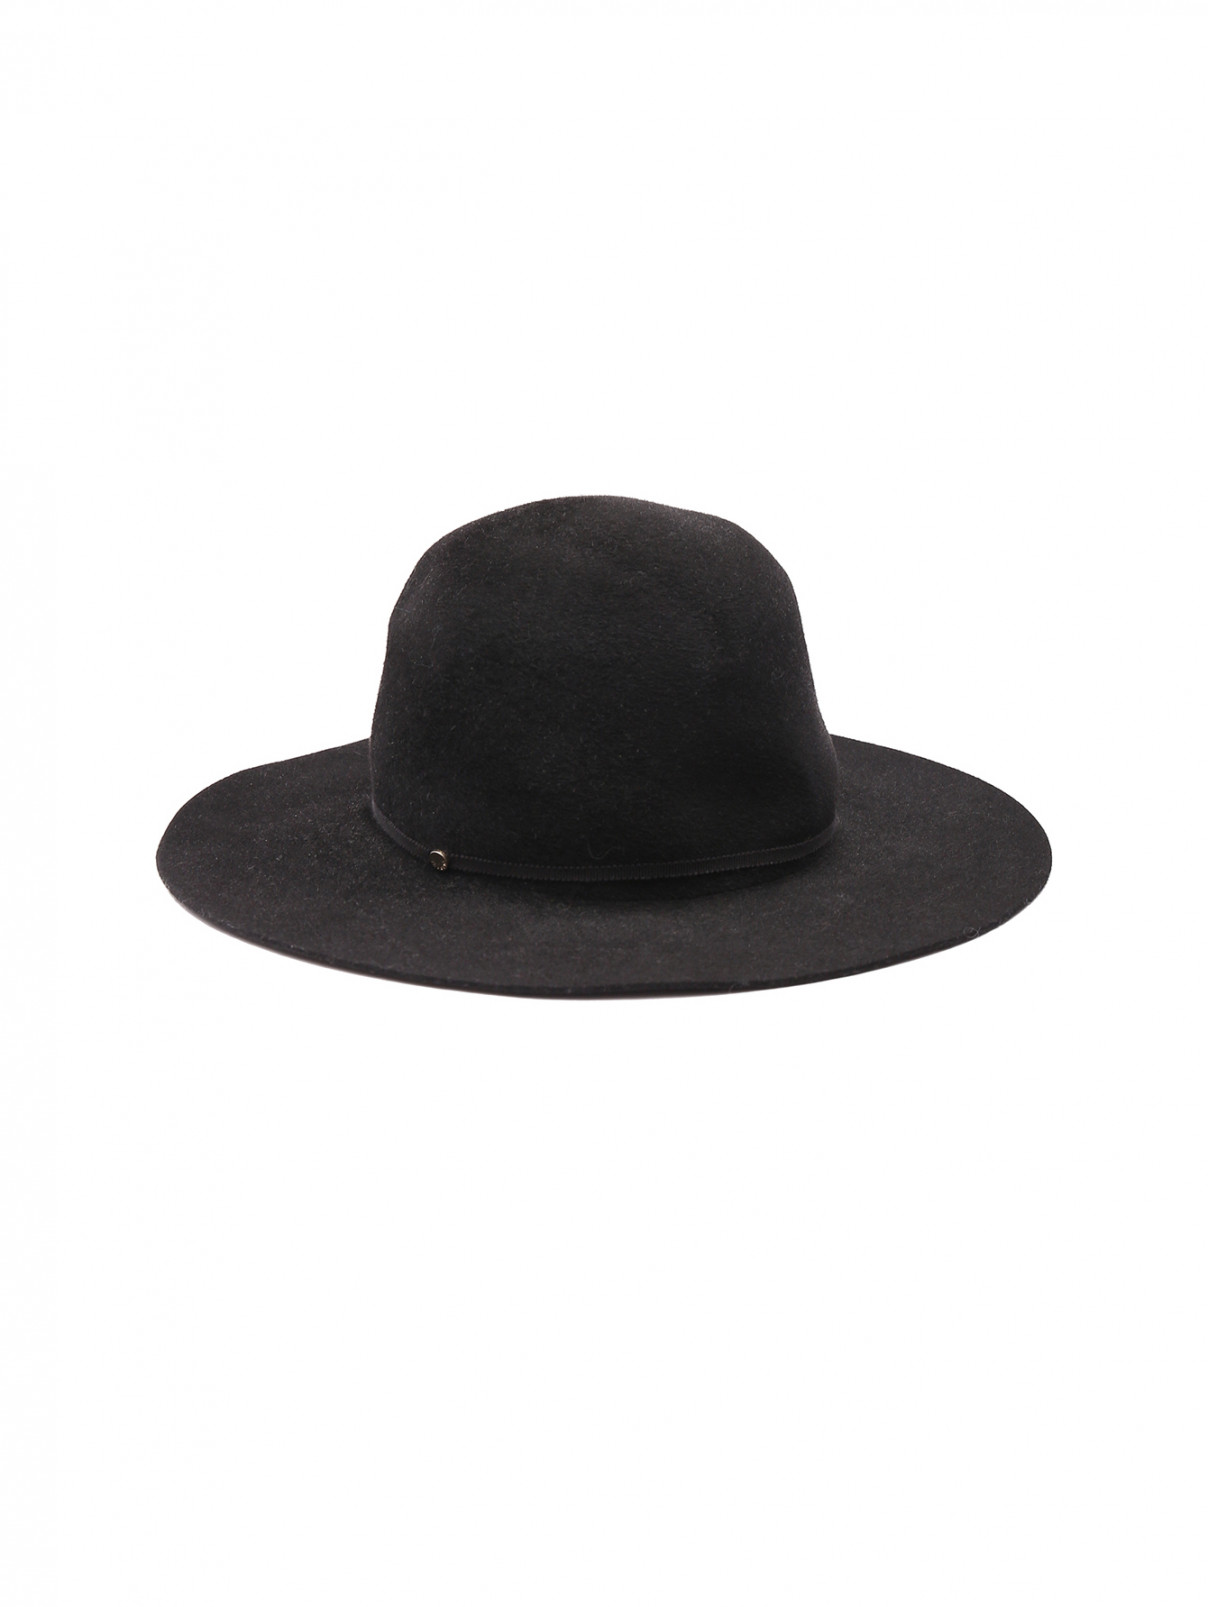 Шляпа из фетра с широкими полями Inverni  –  Общий вид